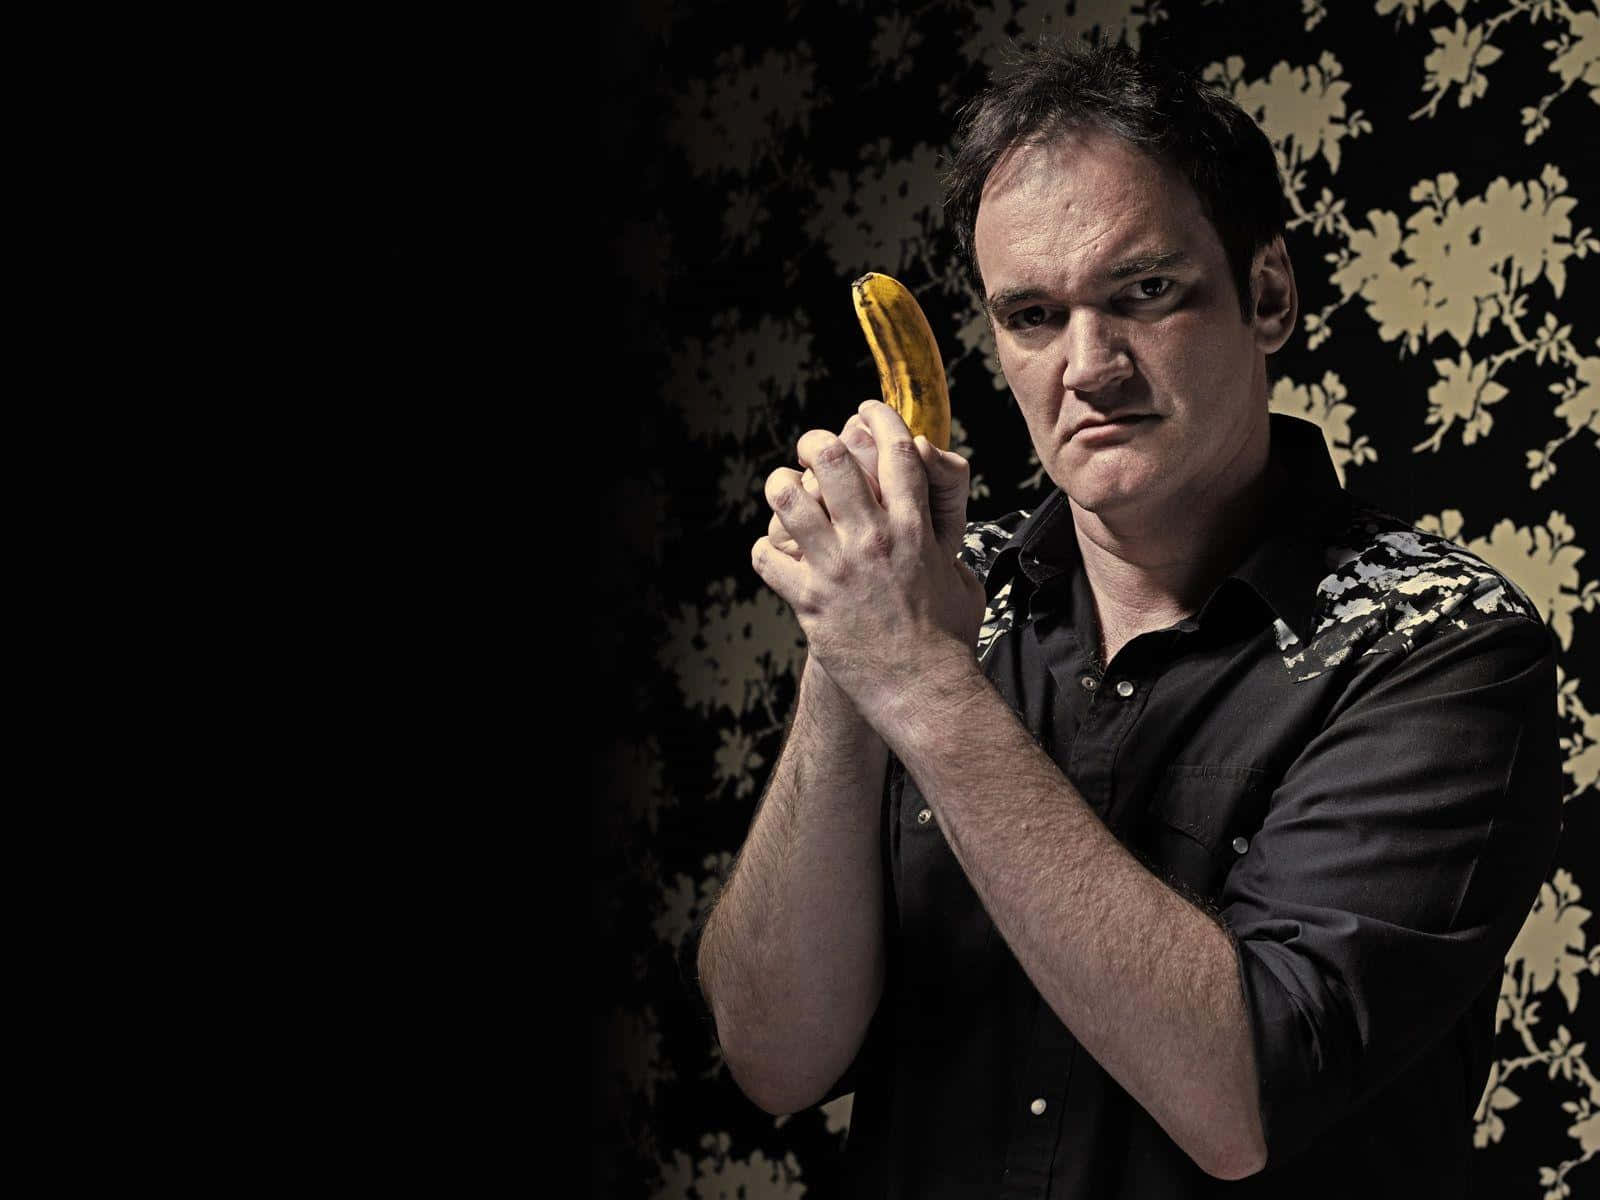 Quentin_ Tarantino_ Holding_ Banana Background